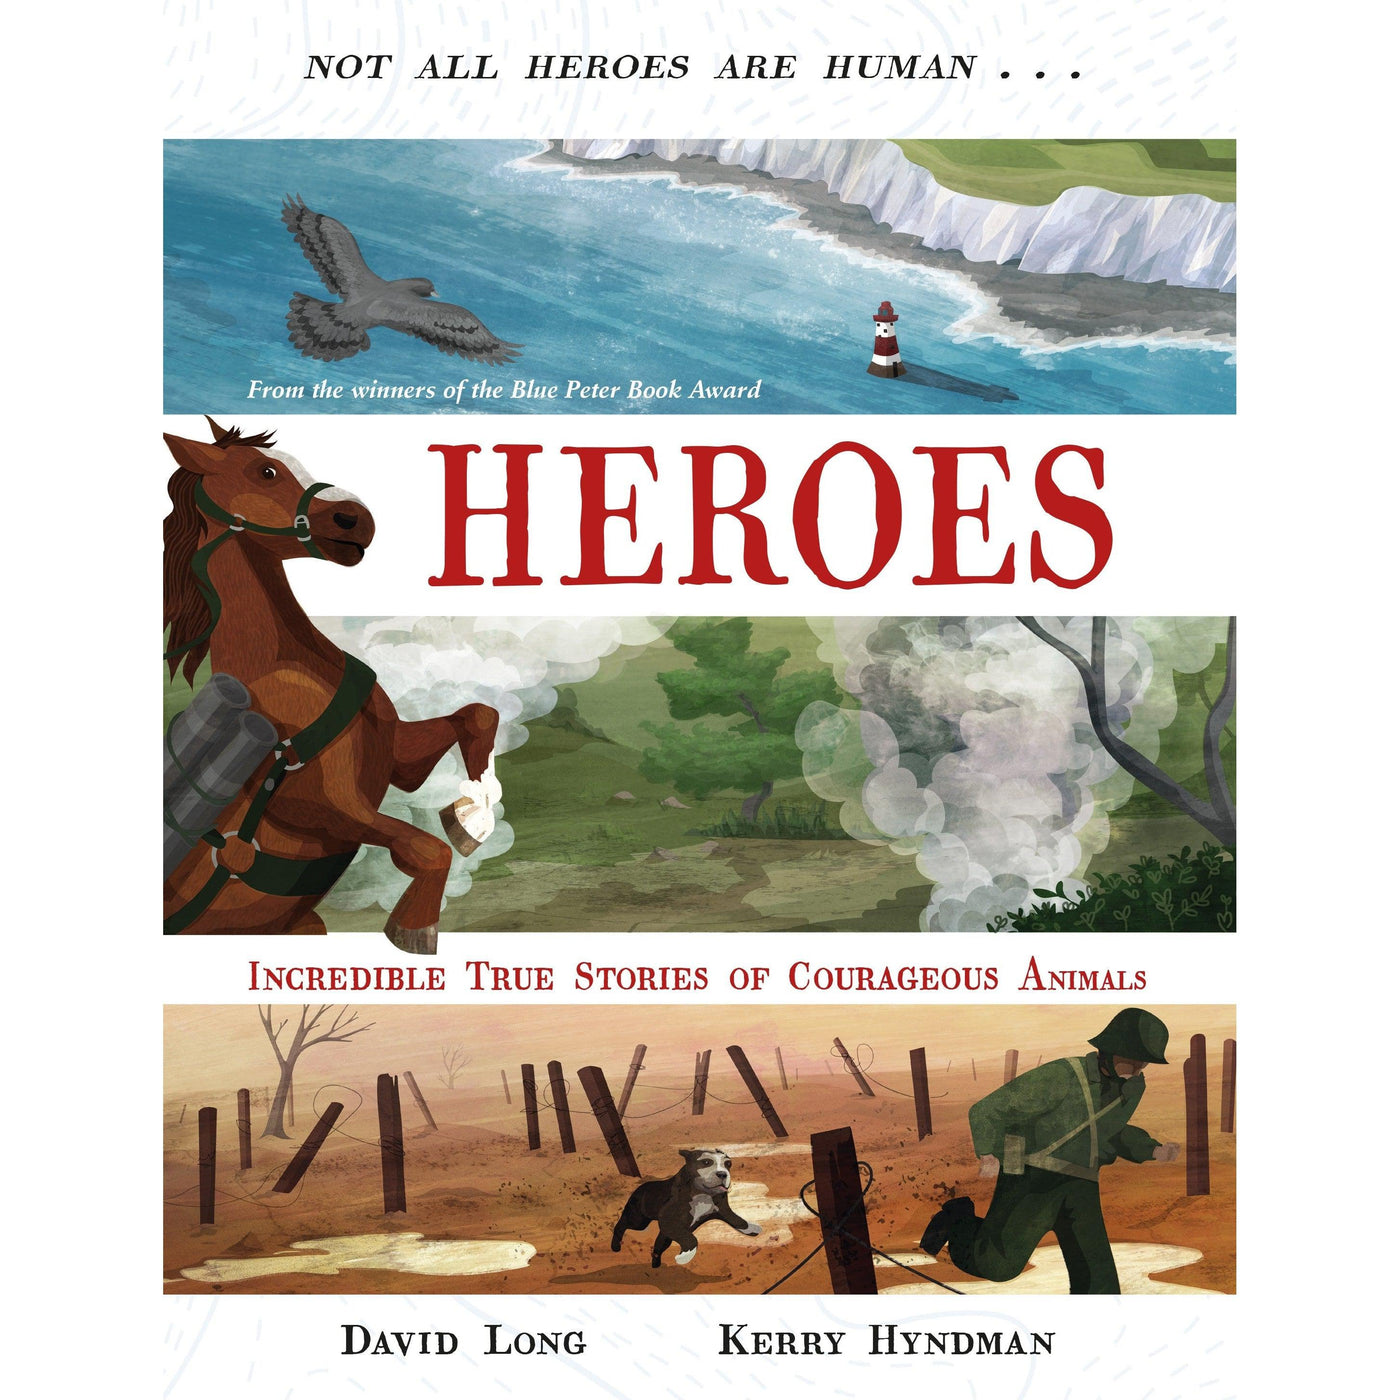 Heroes : Incredible True Stories Of Courageous Animals - David Long & Kerry Hyndman